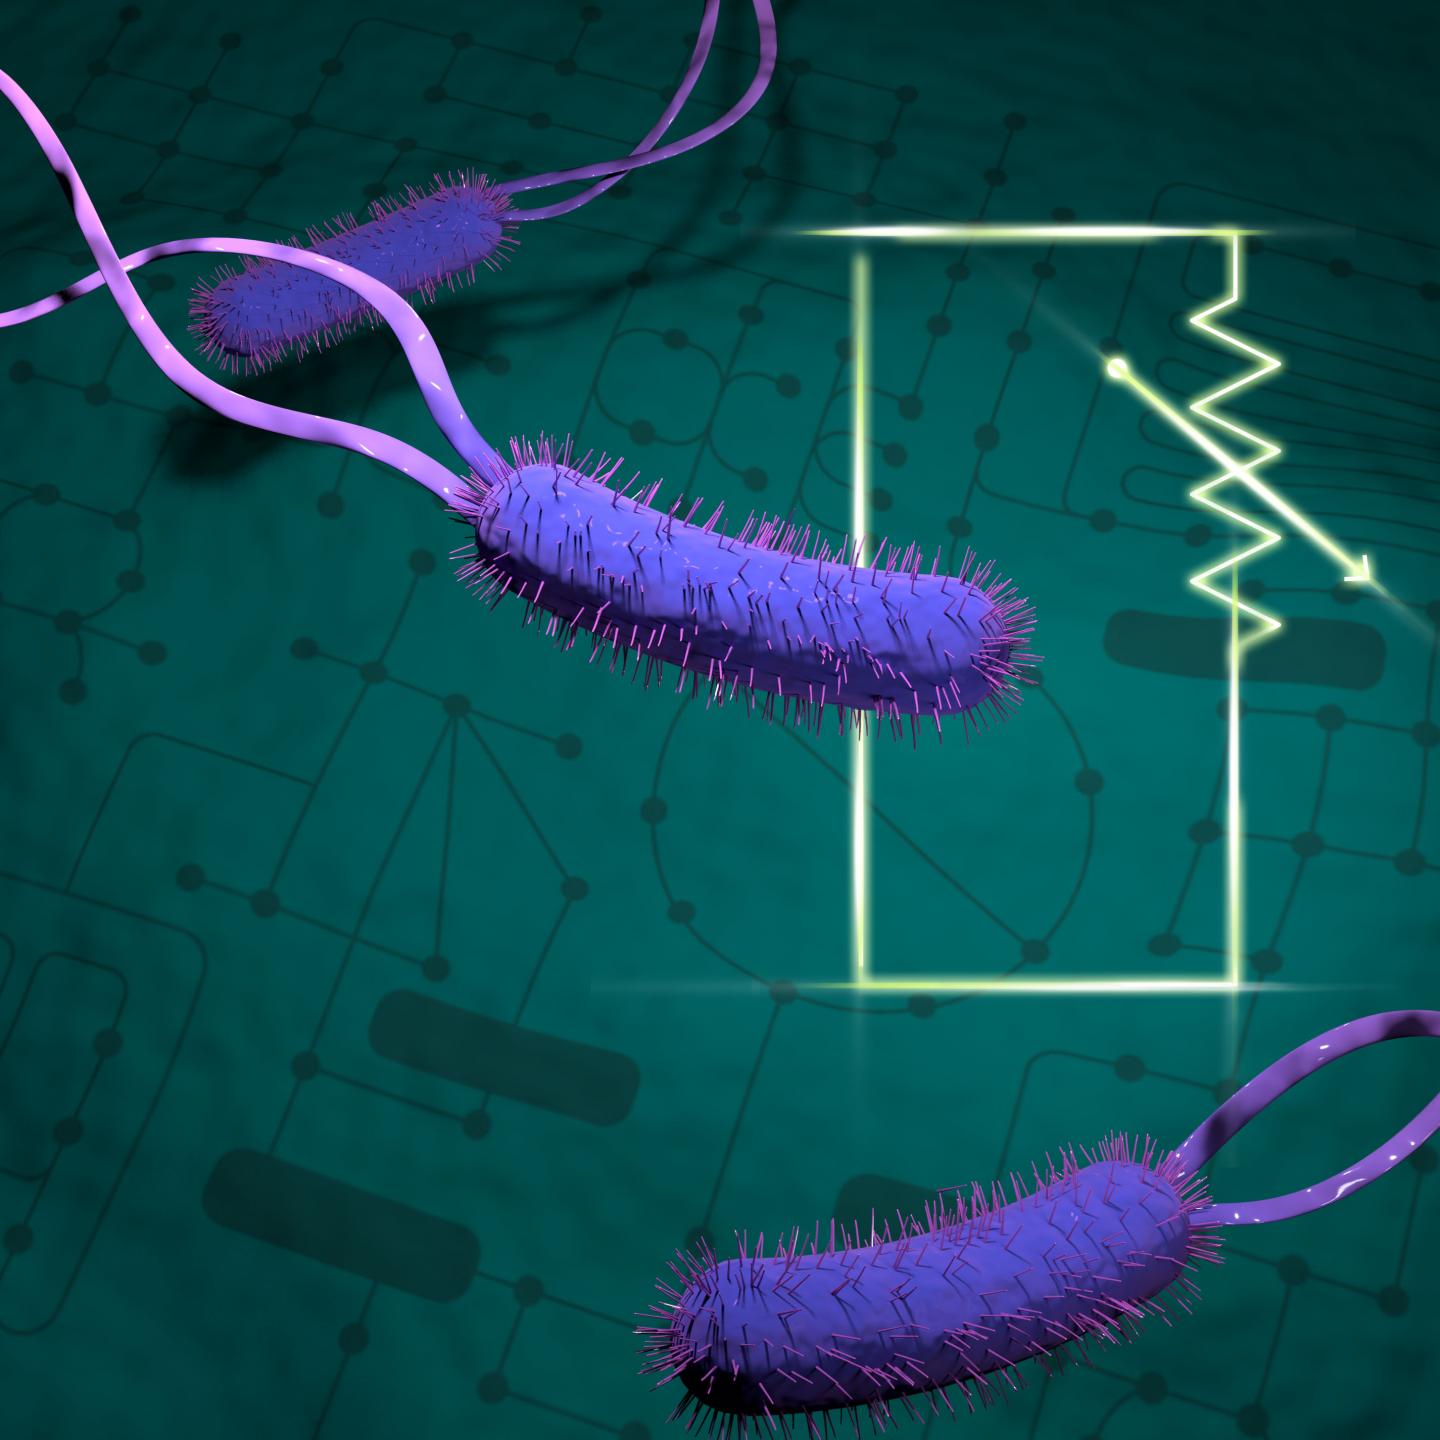 E. coli and circuitry